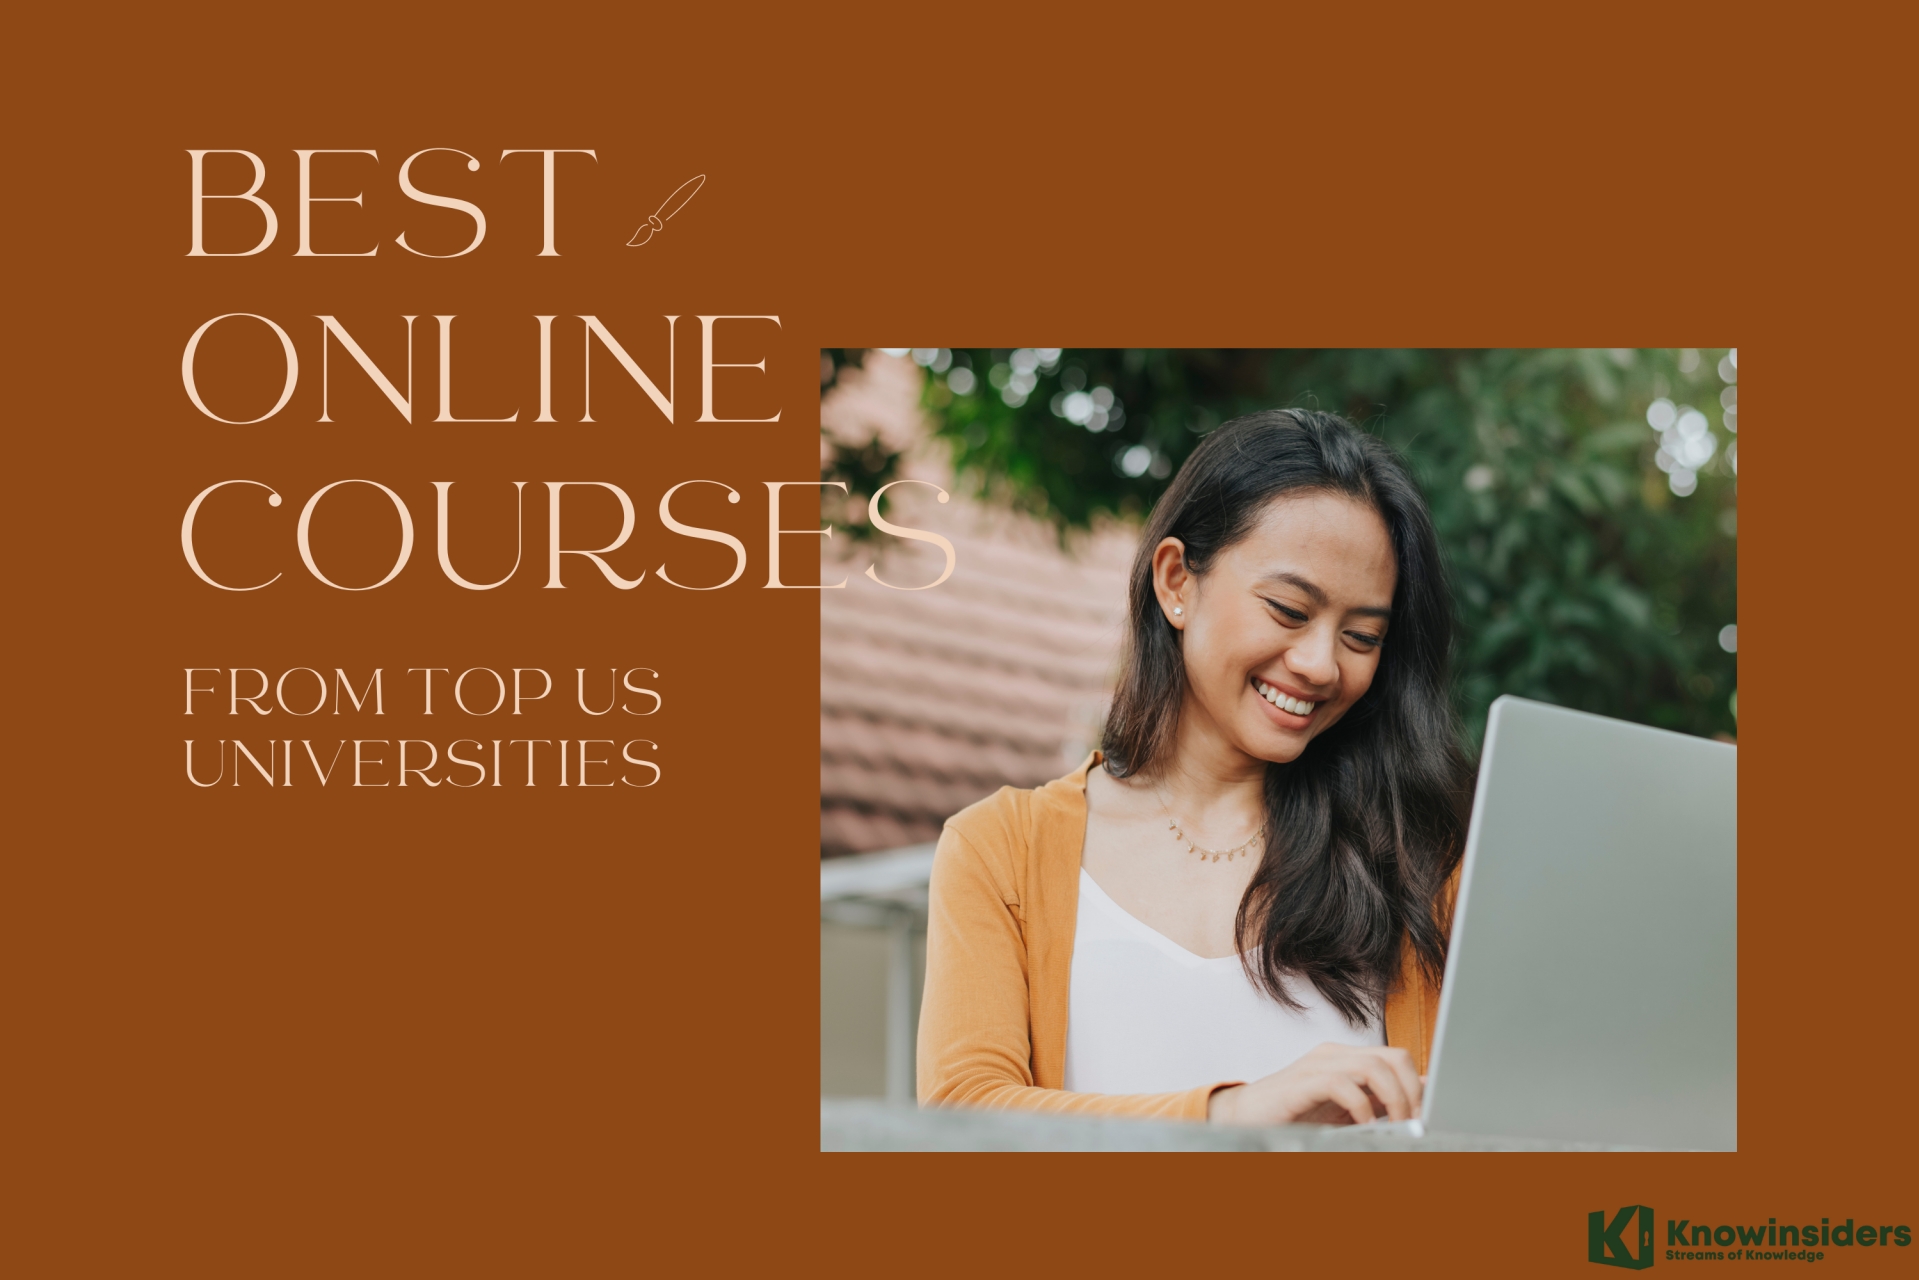 15 Most Popular Online Courses from Top Universities in the U.S